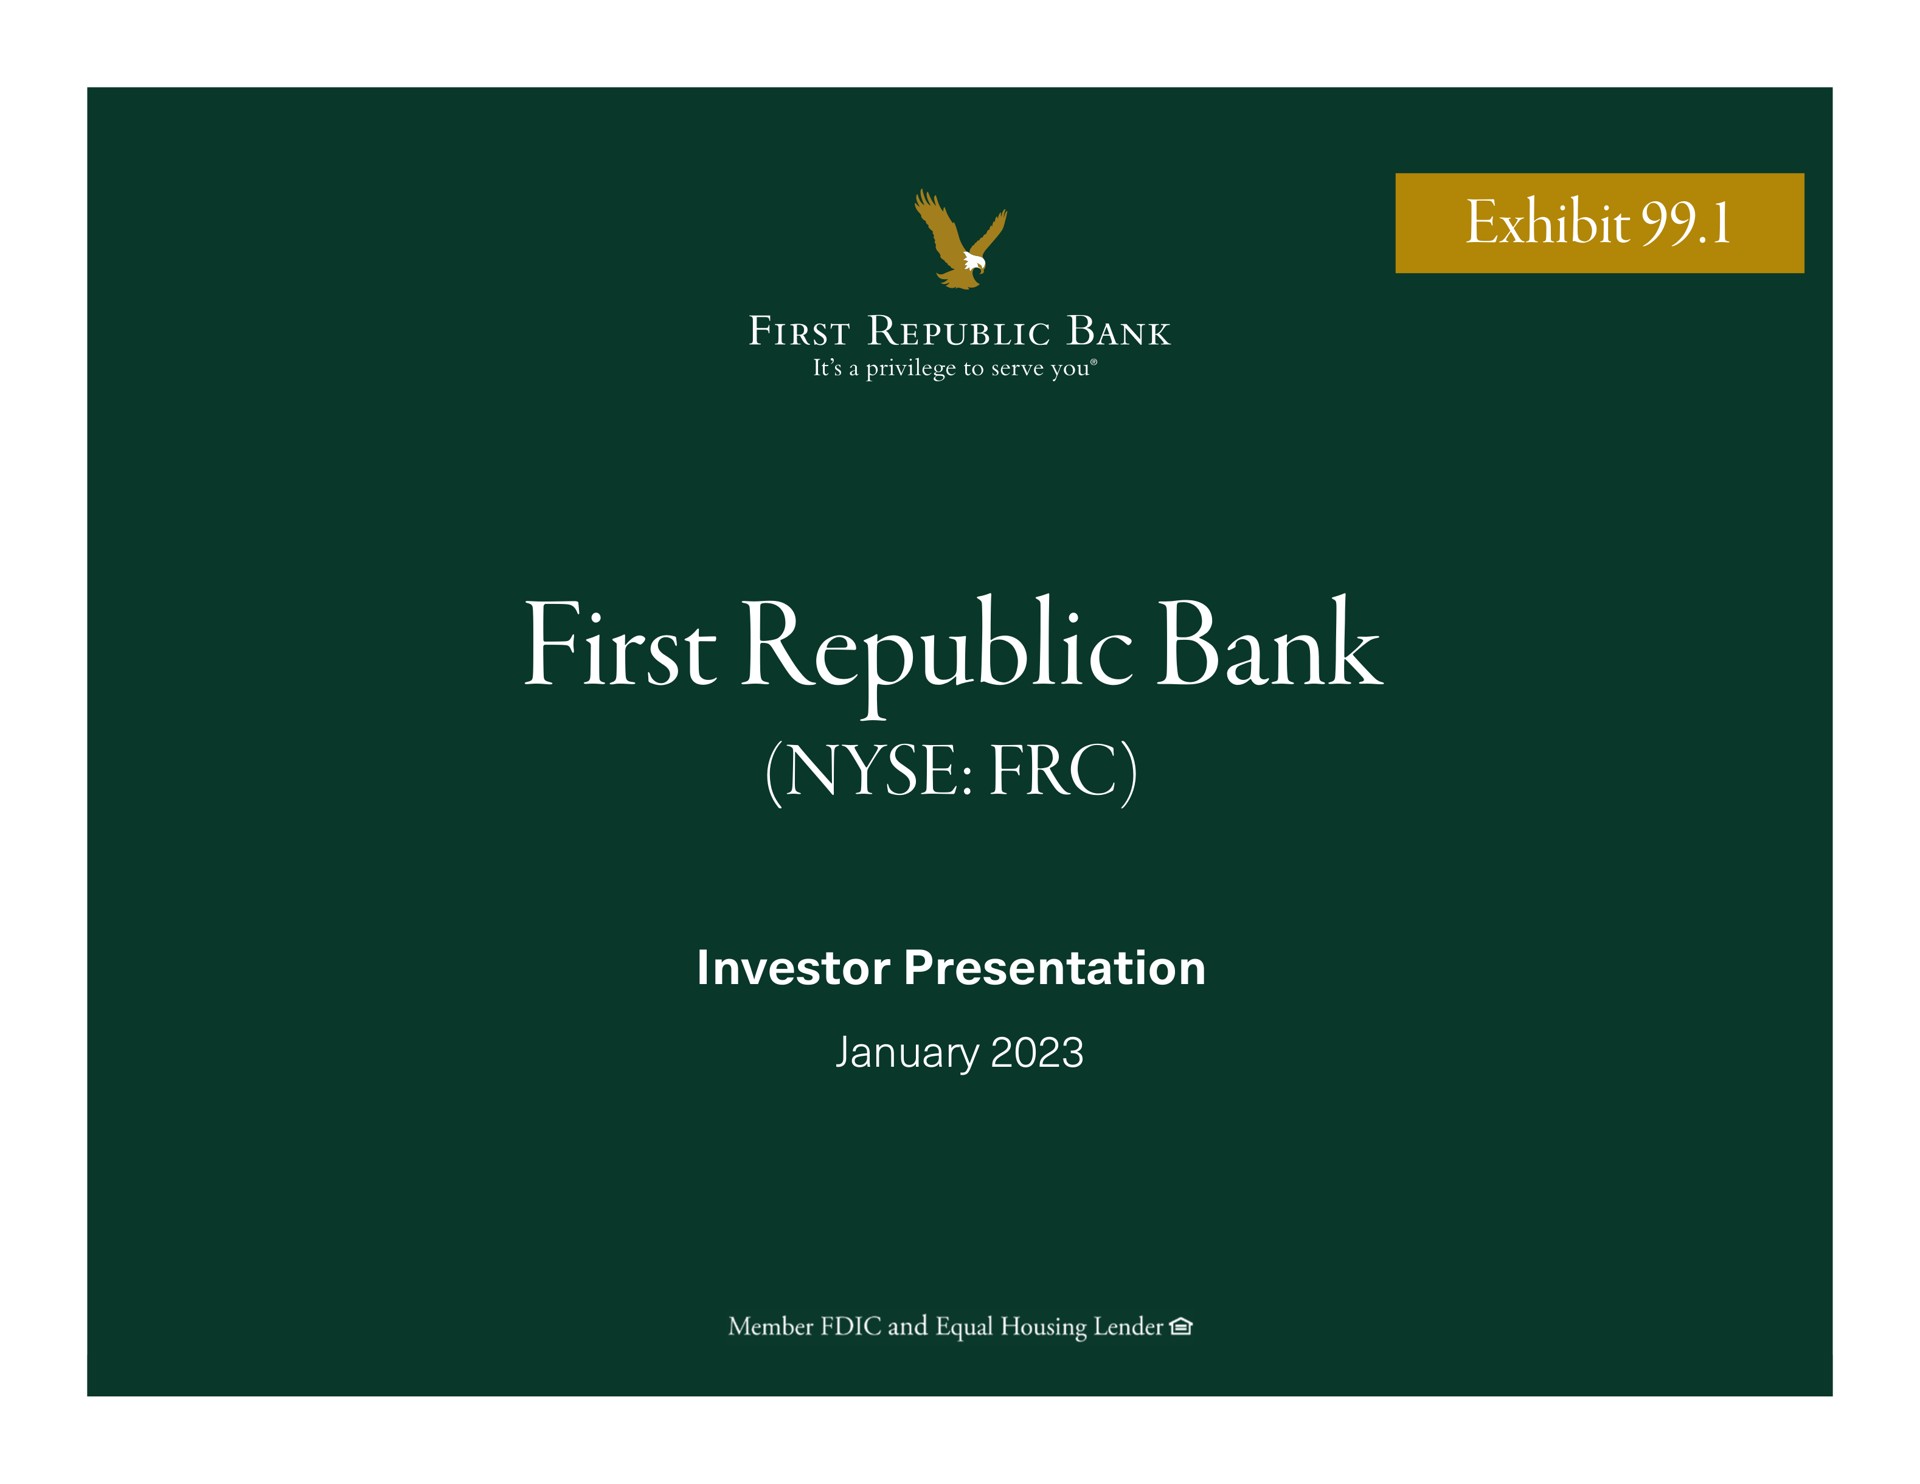 first republic bank investor presentation exhibit | First Republic Bank